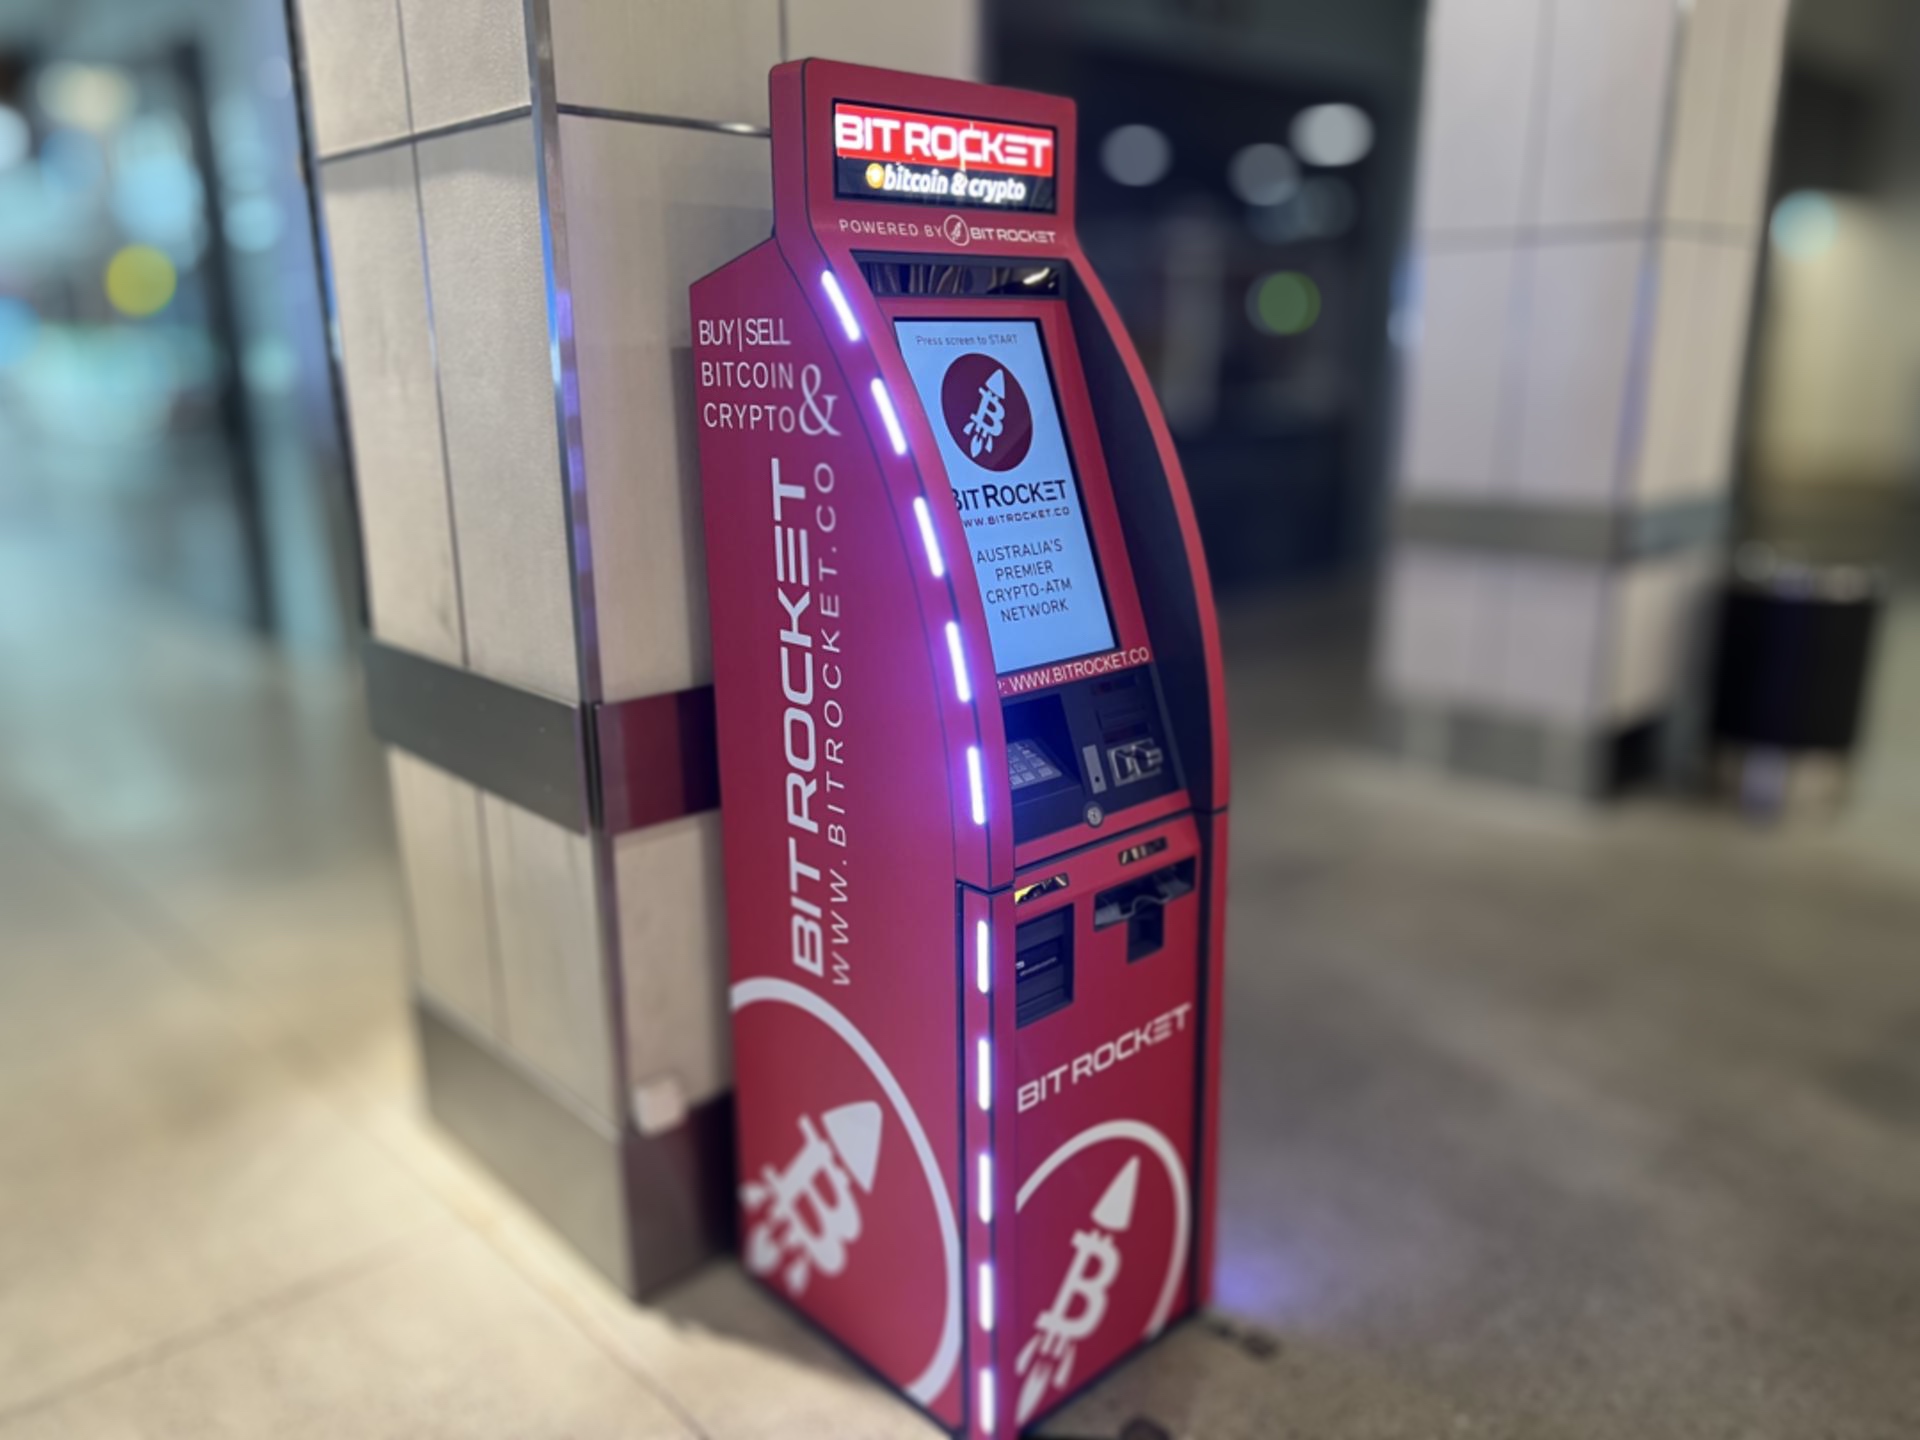 Westfield Doncaster BitRocket Bitcoin ATM